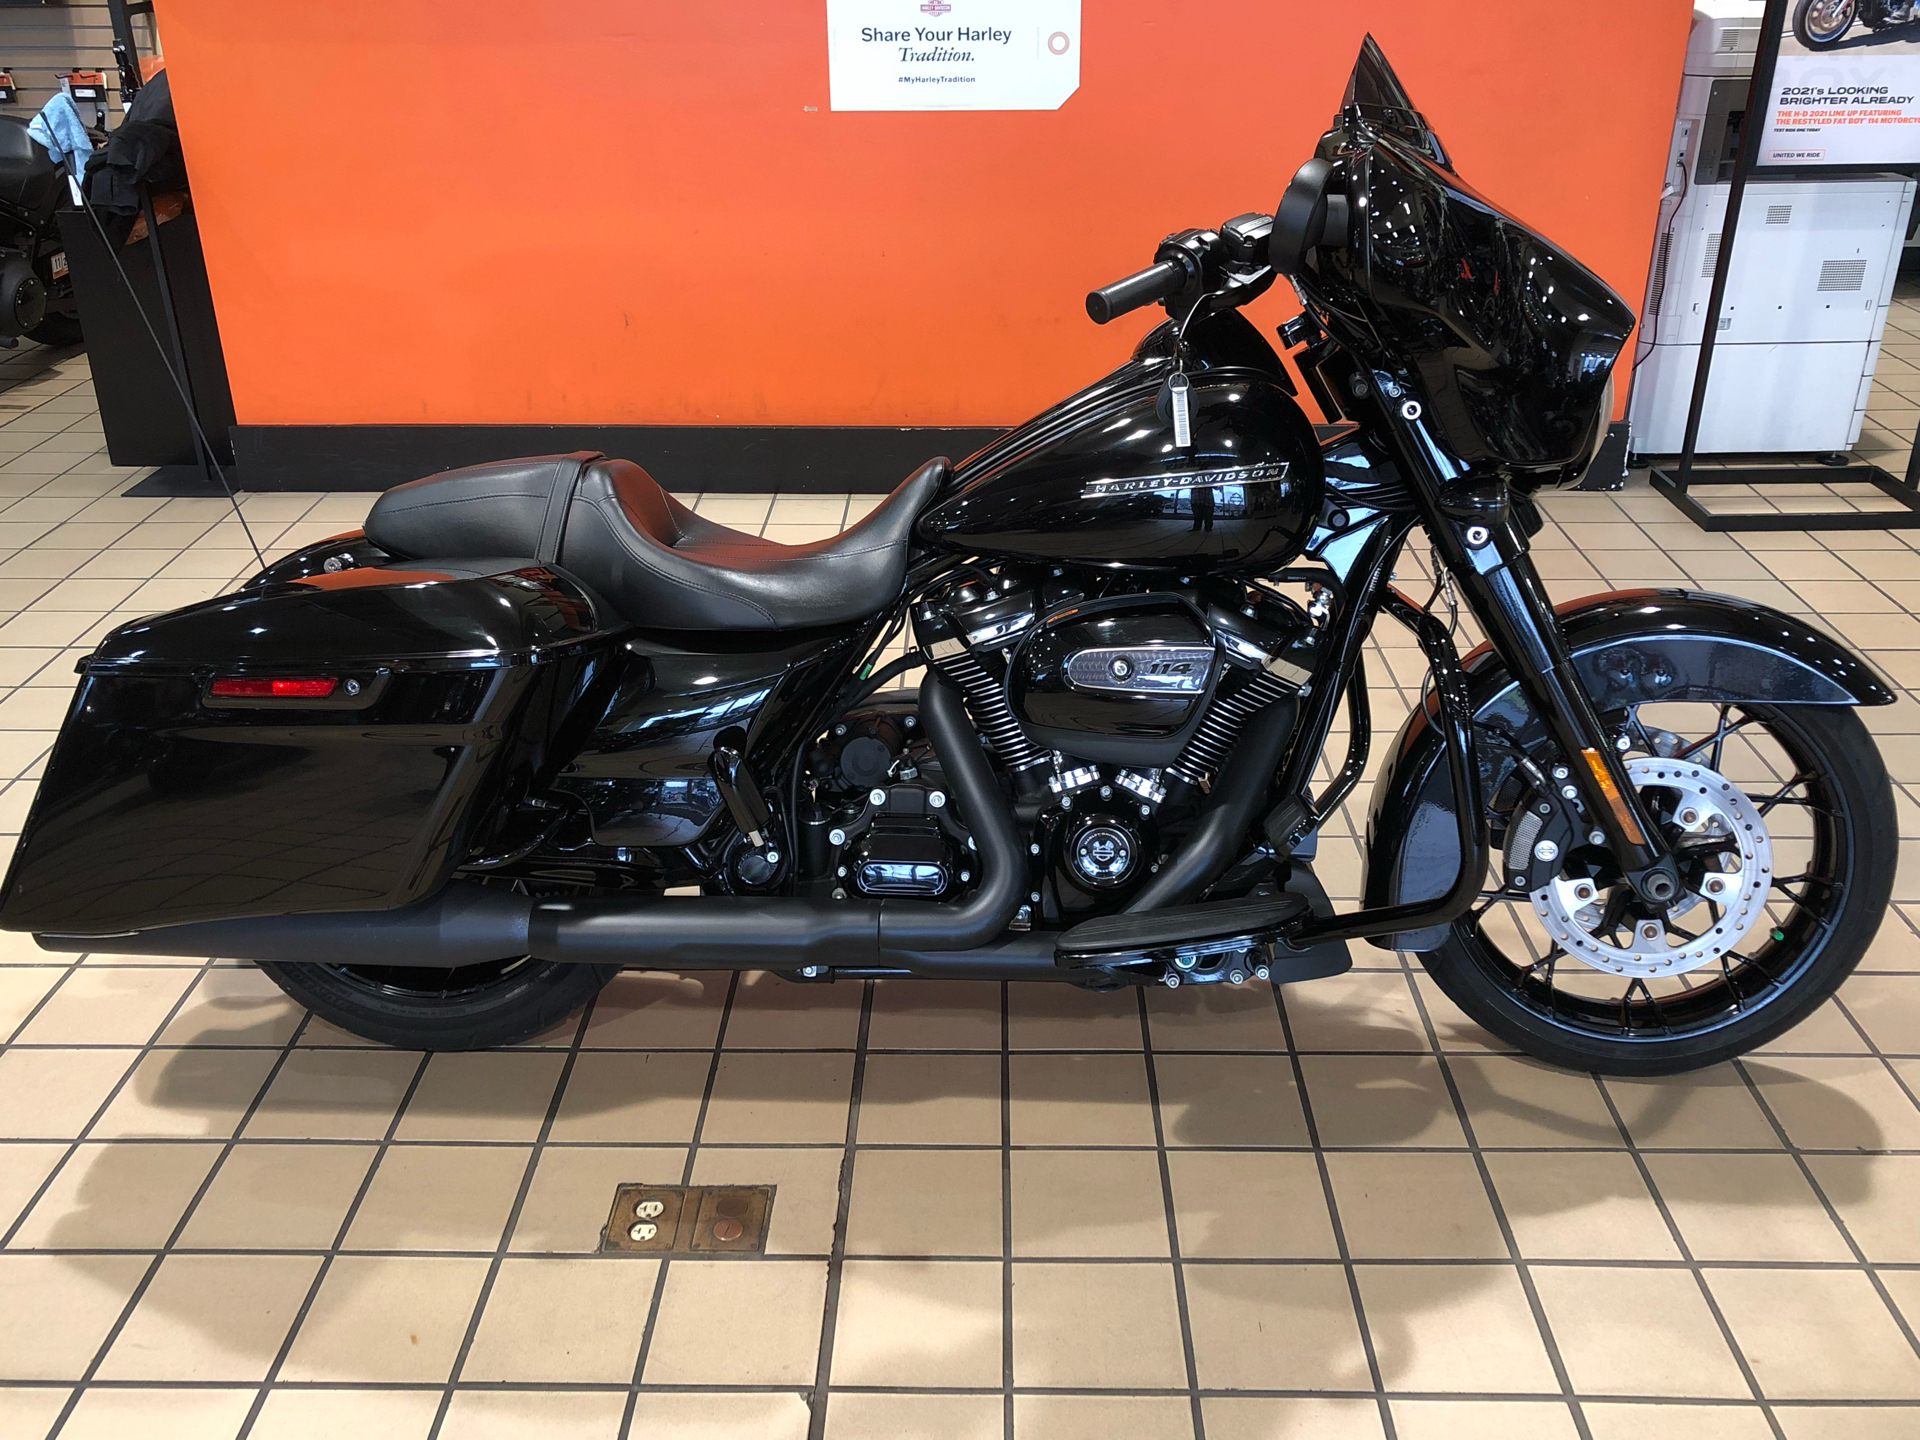 2020 Harley-Davidson Street Glide® Special in Dumfries, Virginia - Photo 2